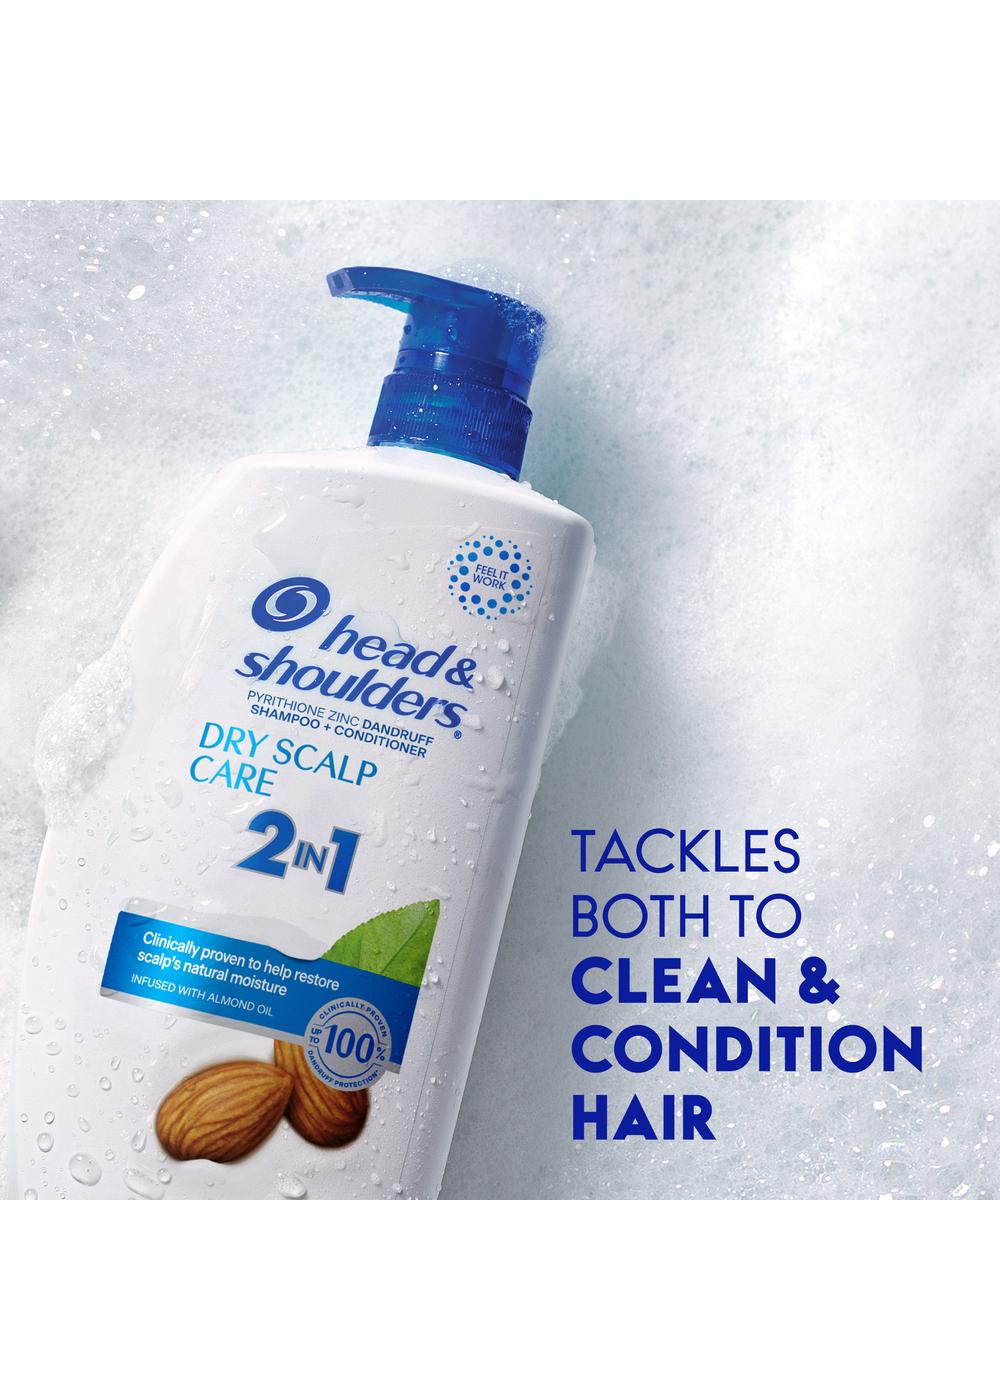 Head & Shoulders 2 in 1 Dandruff Shampoo + Conditioner - Dry Scalp Care; image 8 of 11